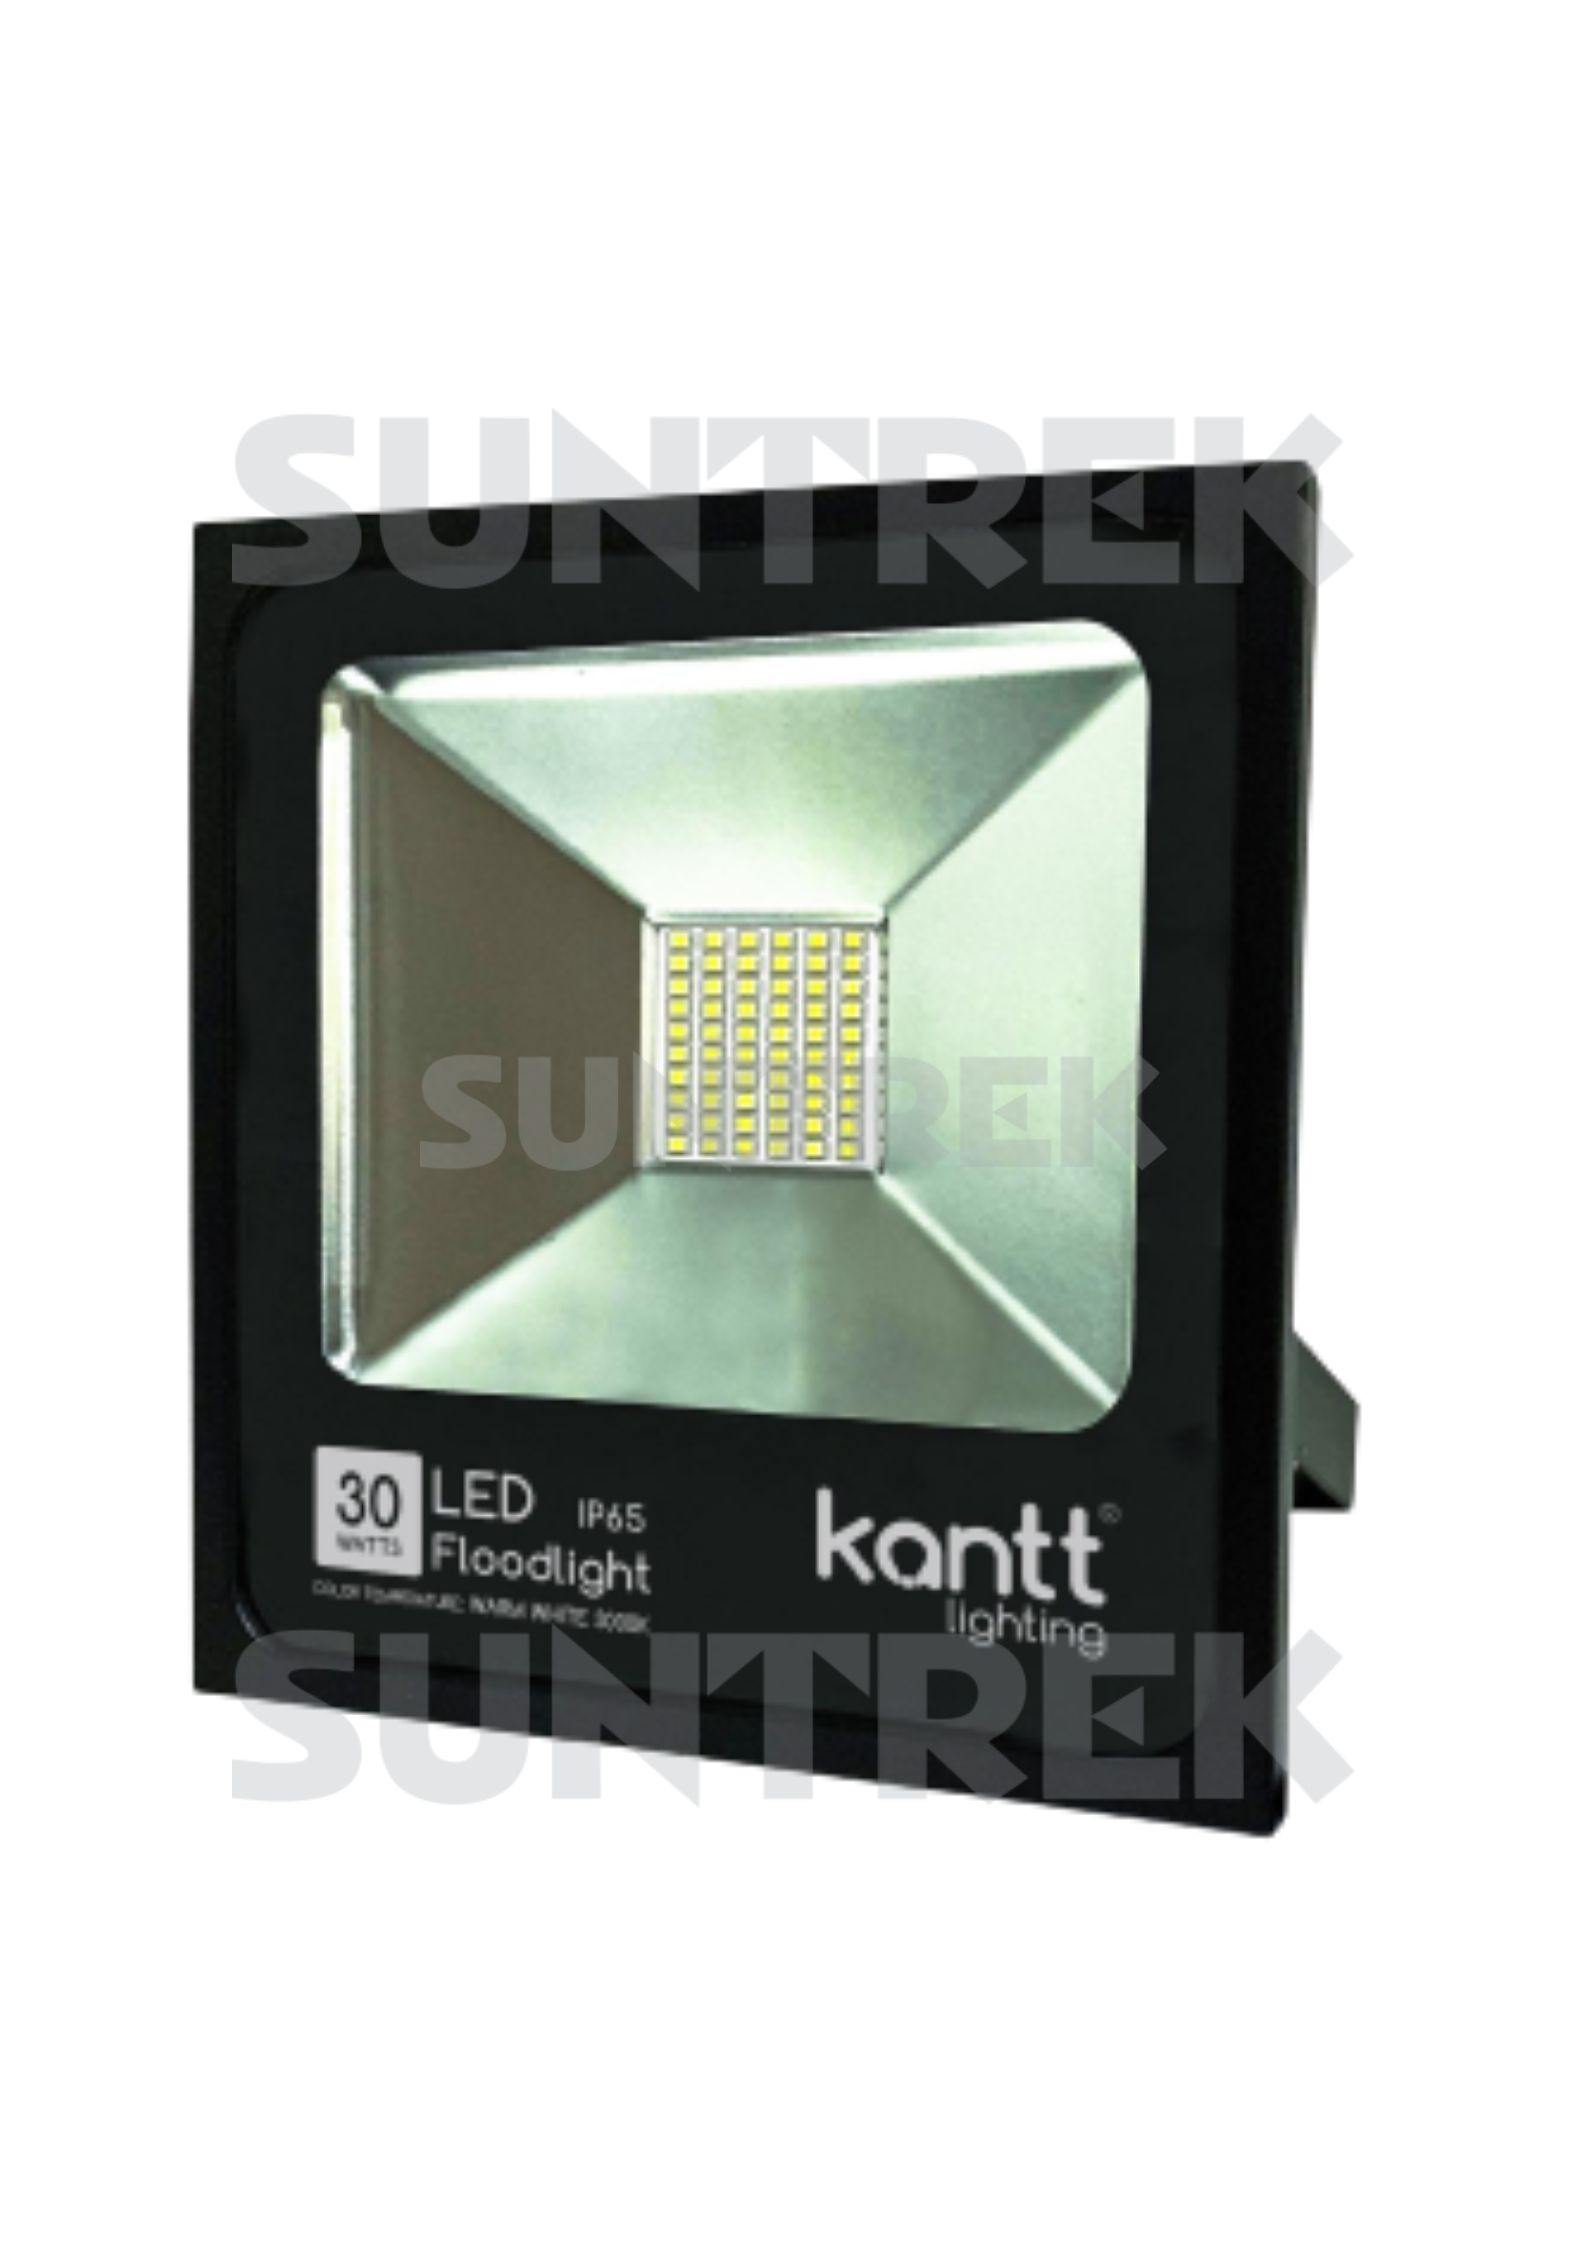 KANTT LED FLOOD LIGHT 30 WATTS (KA-FL30DL)